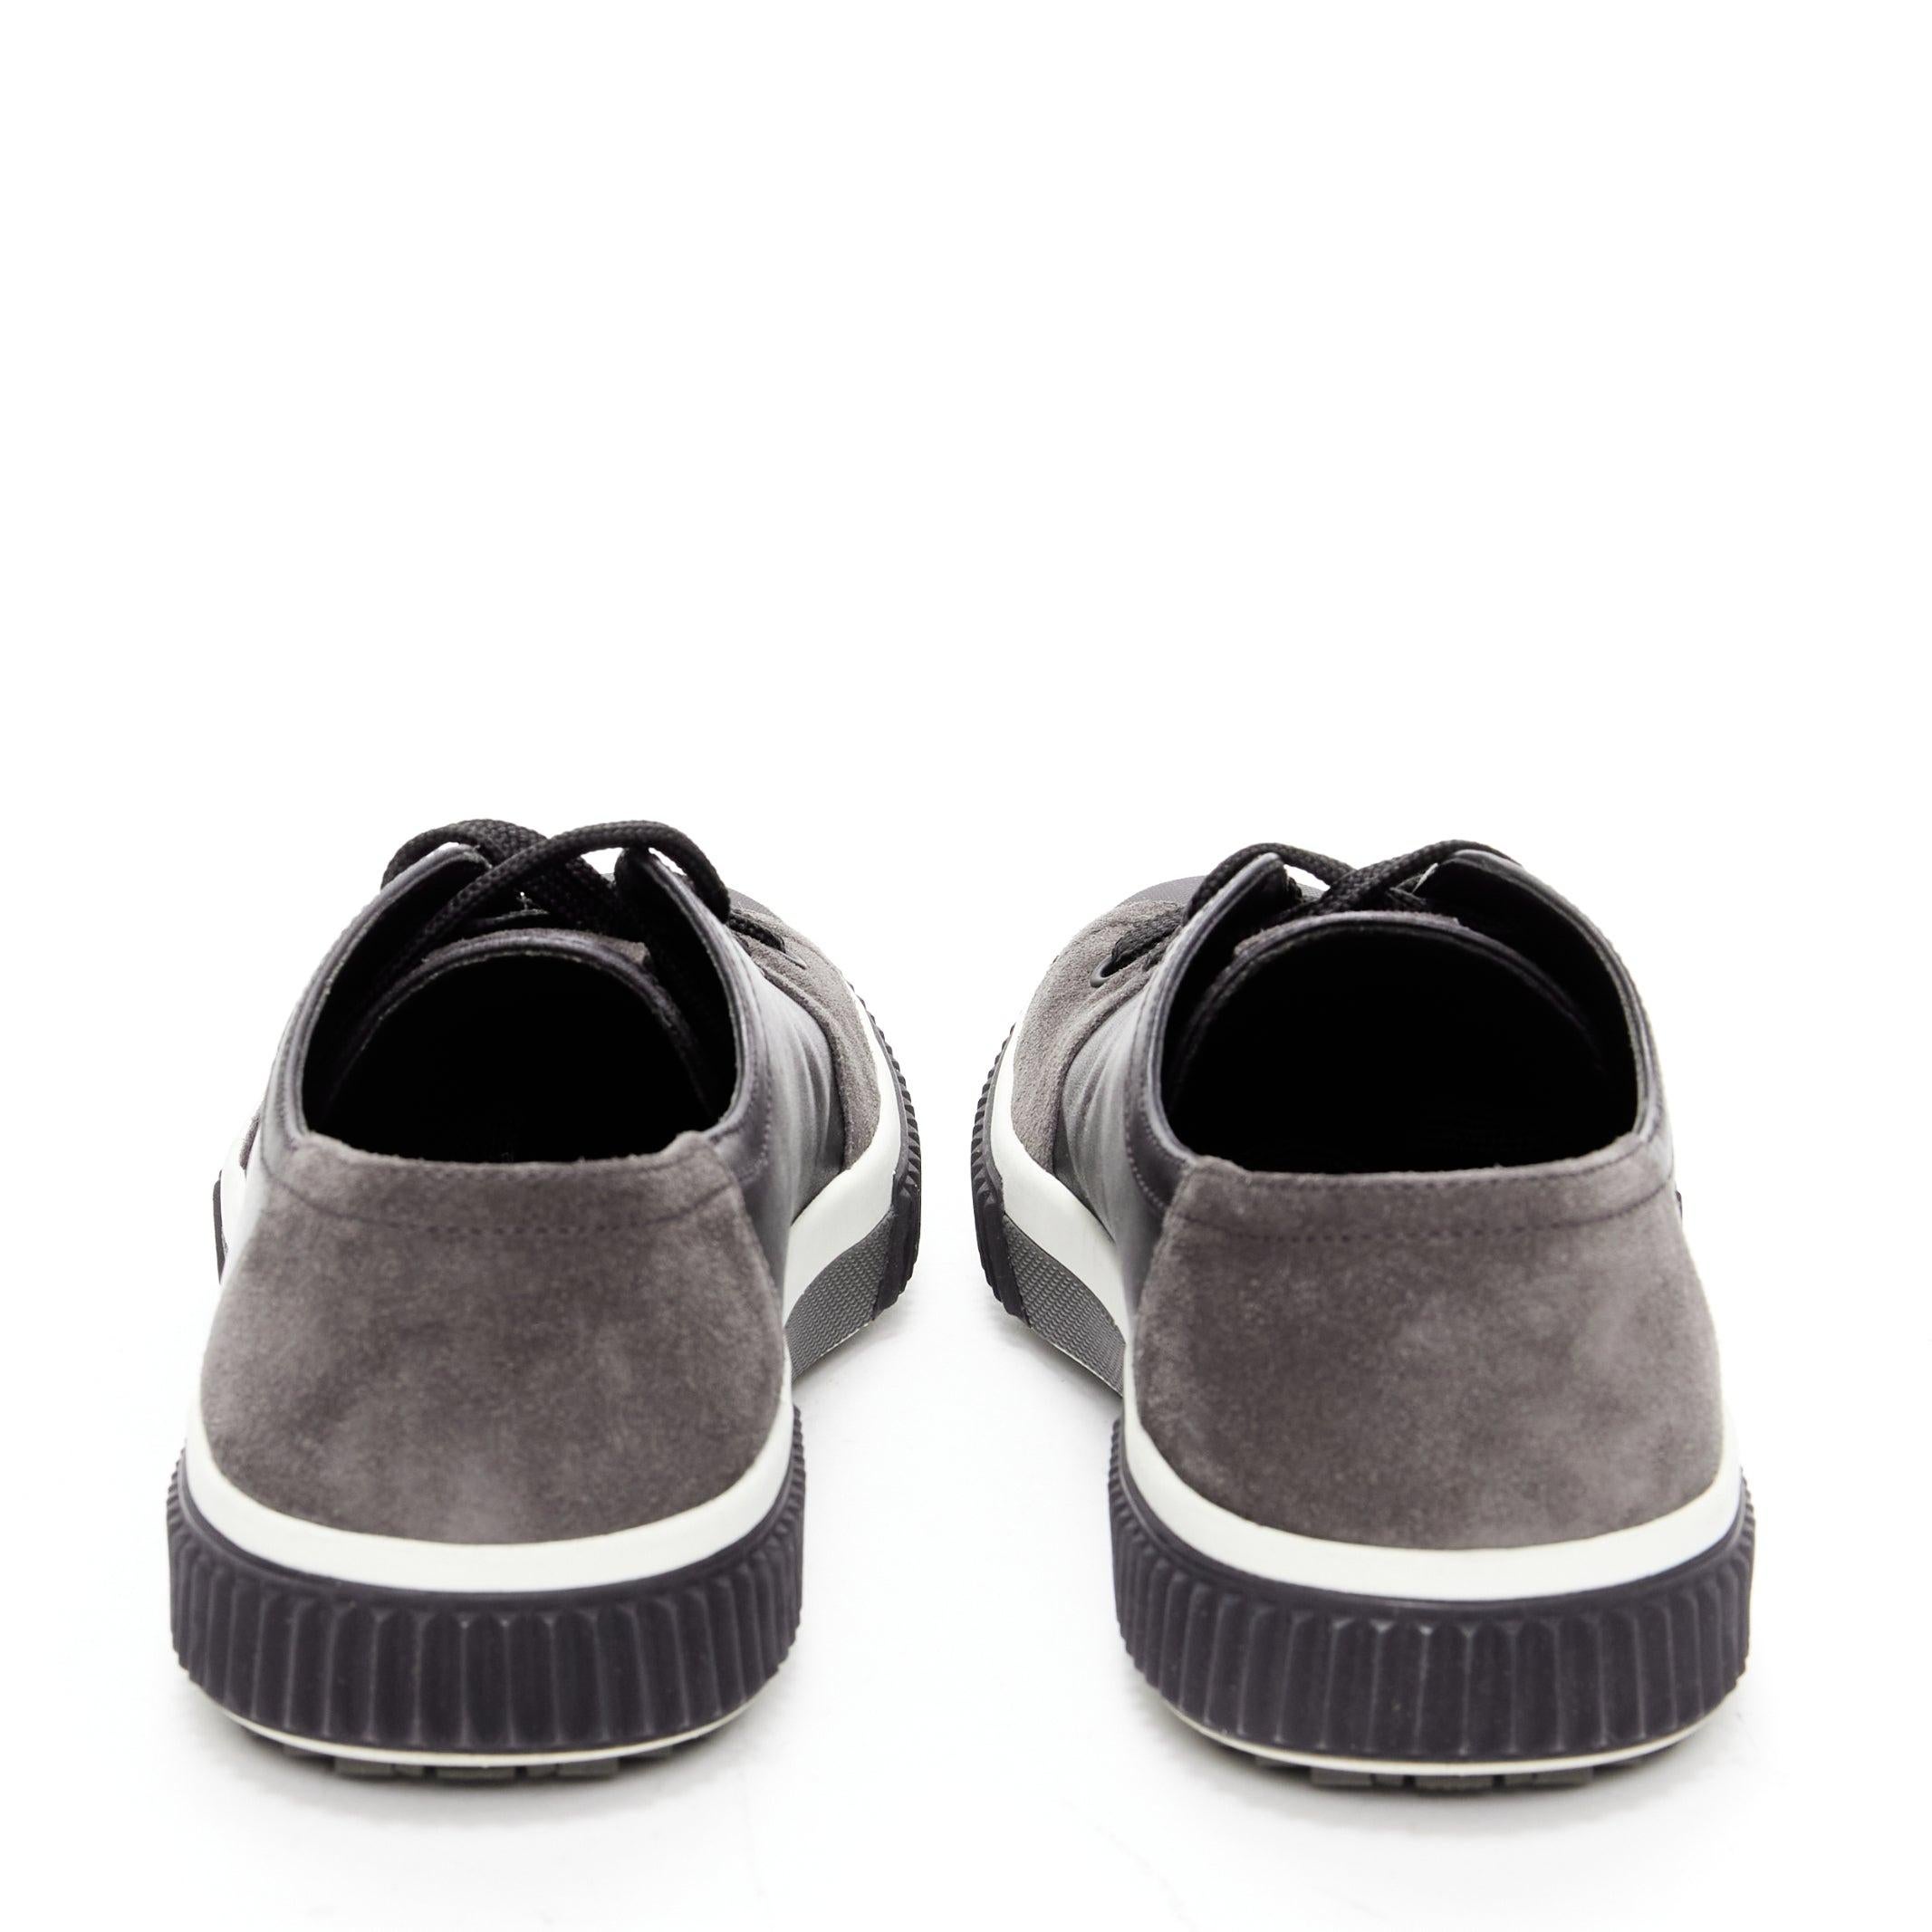 Men's PRADA Stratus black grey suede leather low top sneakers UK5.5 EU39.5 For Sale